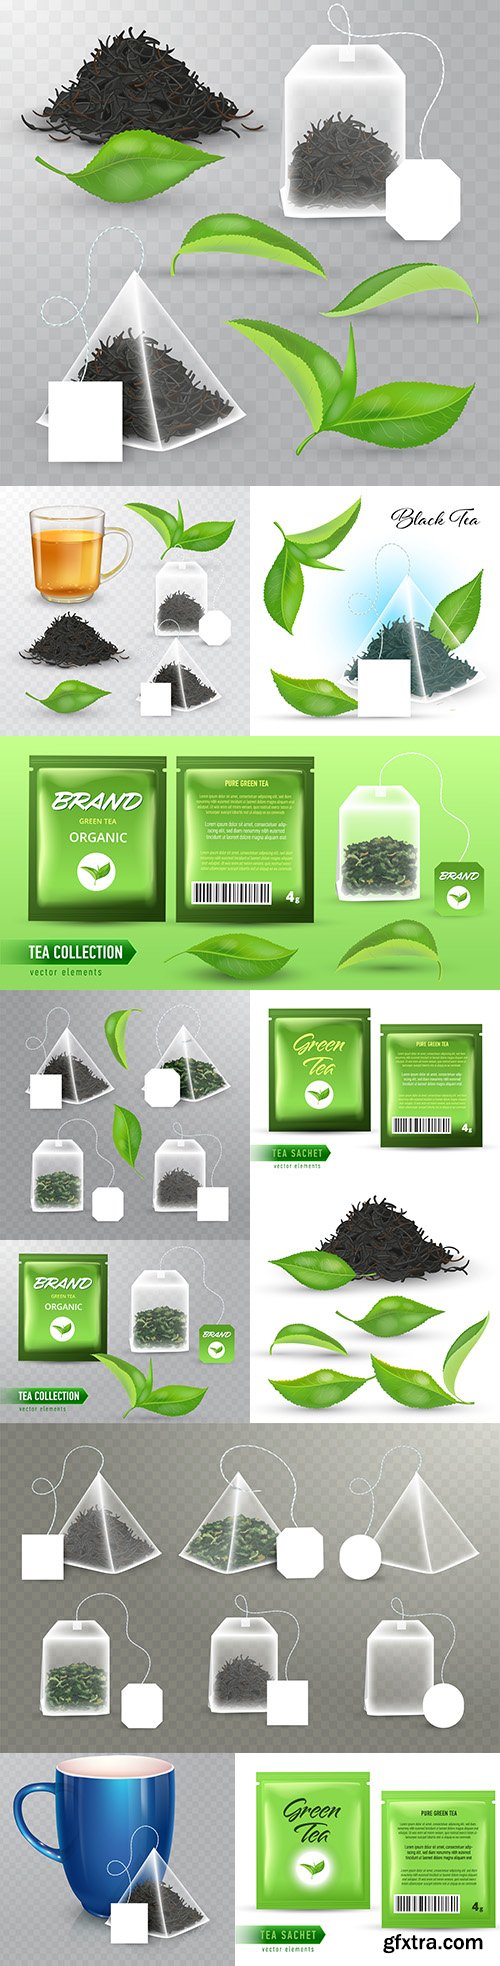 Green and black tea pyramidal bag and realistic leaves
